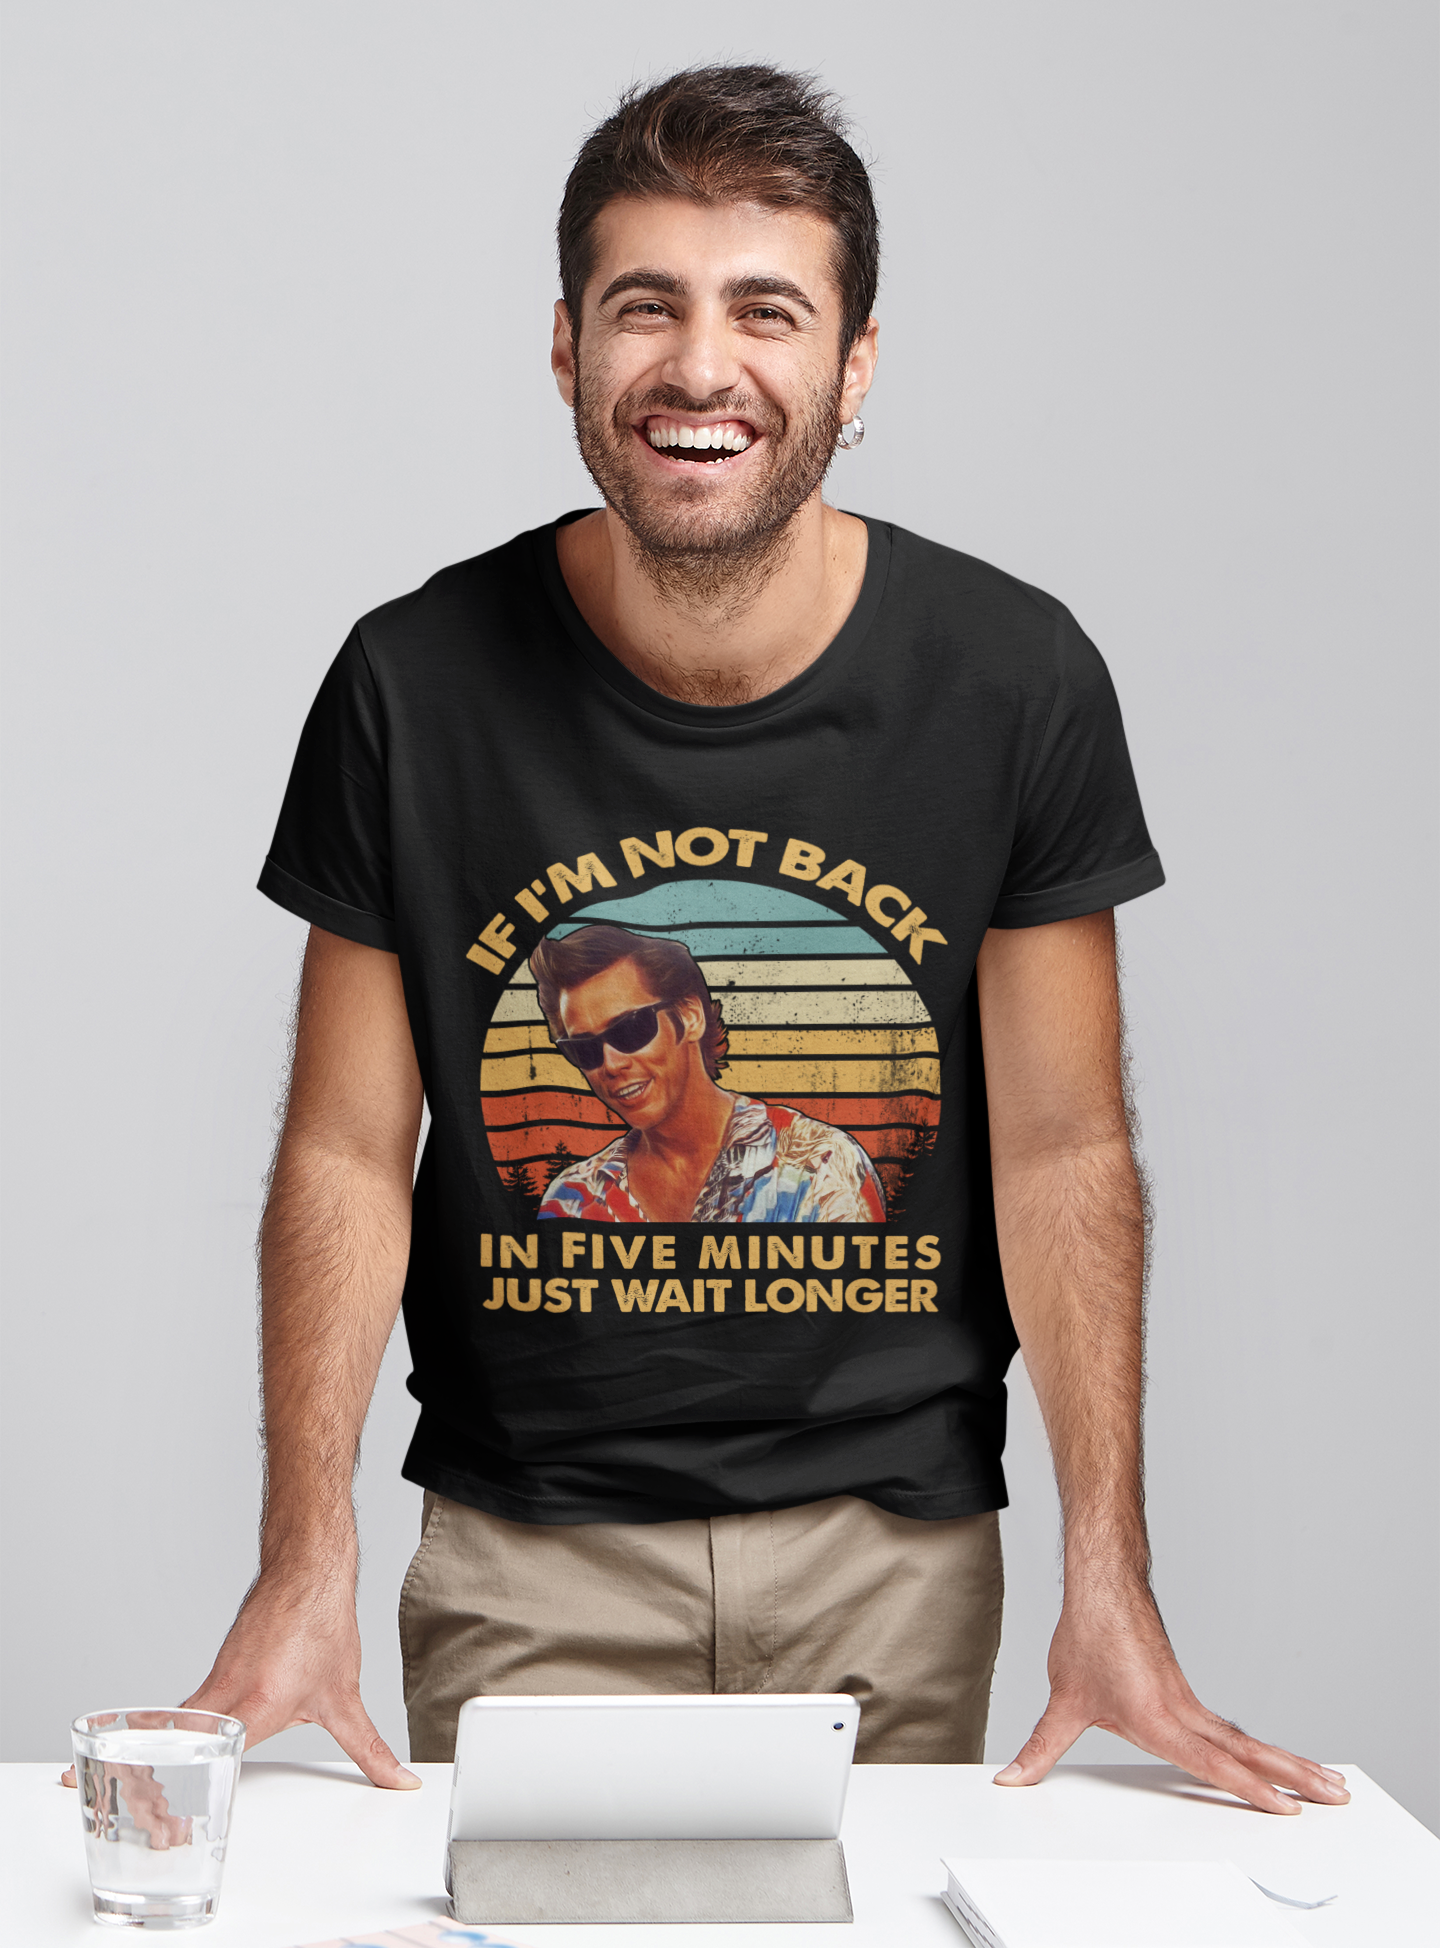 Ace Ventura Pet Detective T Shirt, Ace Ventura T Shirt, If Im Not Back In Five Minutes Just Wait Longer Tshirt